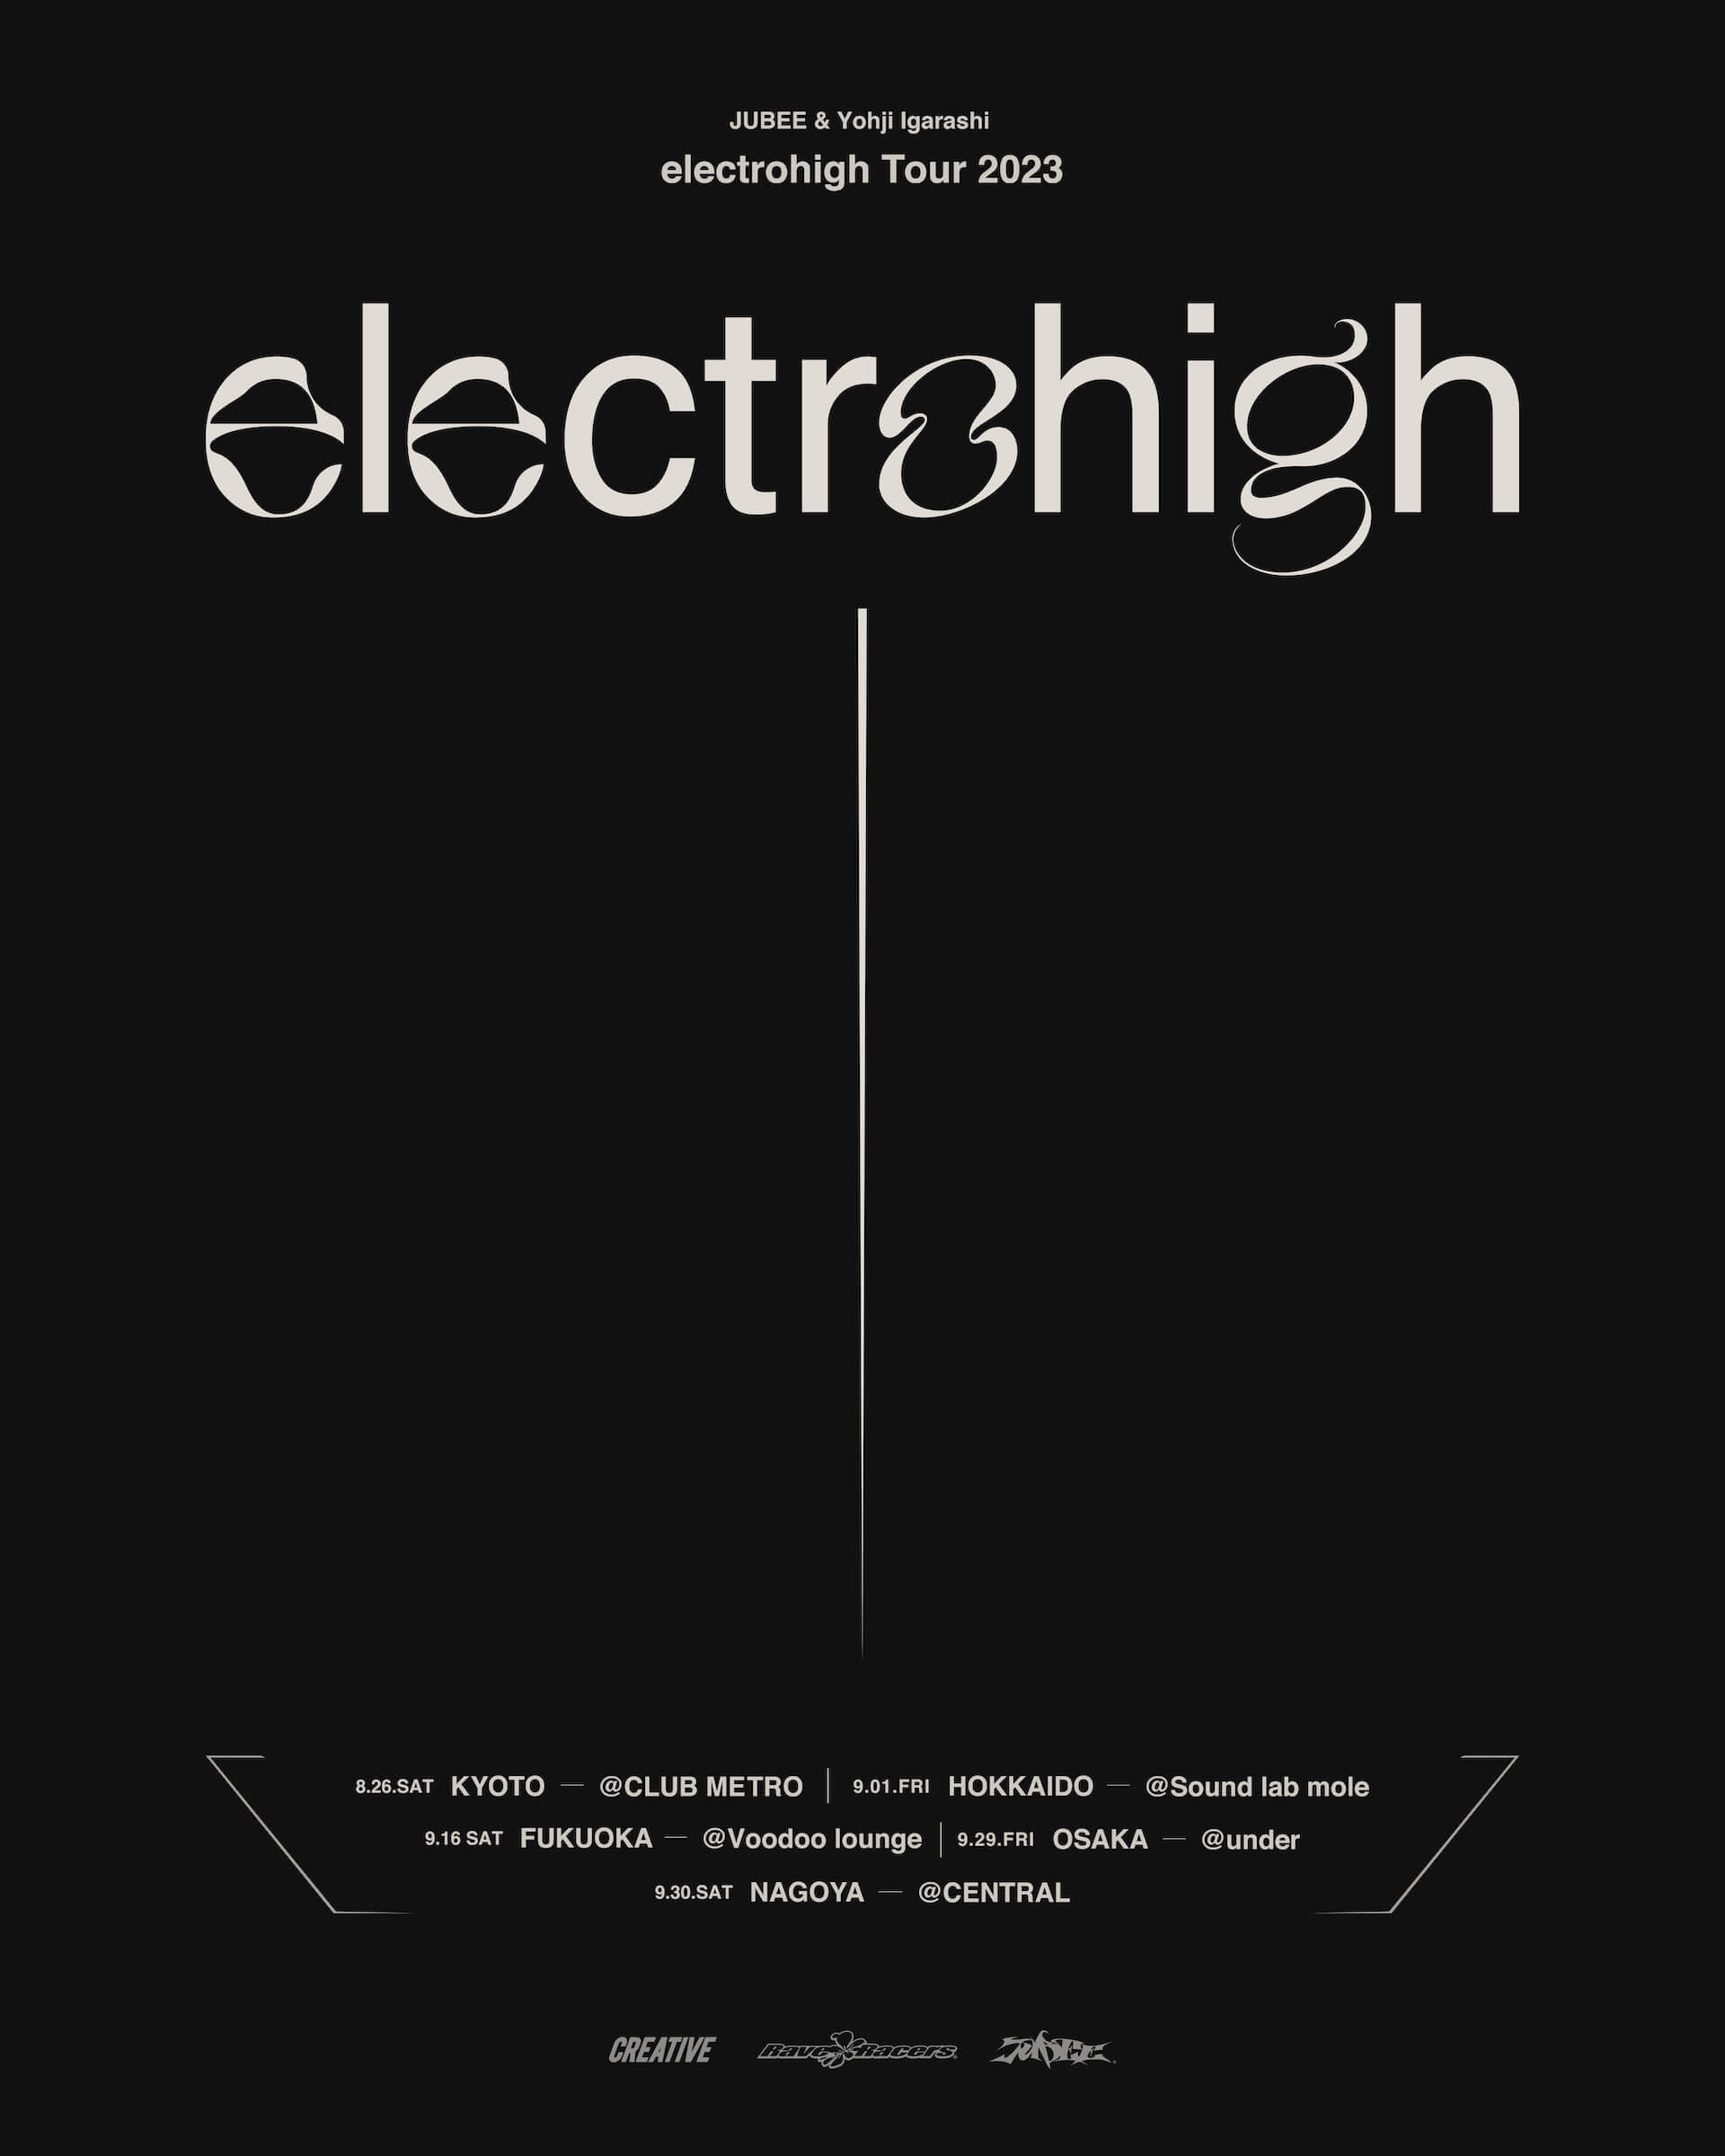 JUBEE＆Yohji IgarashiのコラボレーションEP『electrohigh』がリリース｜コンセプトは「現代のエレクトロ・クラッシュ」、森（どんぐりず）やHIYADAMが参加 music230802-jubee-yohji-igarashi5